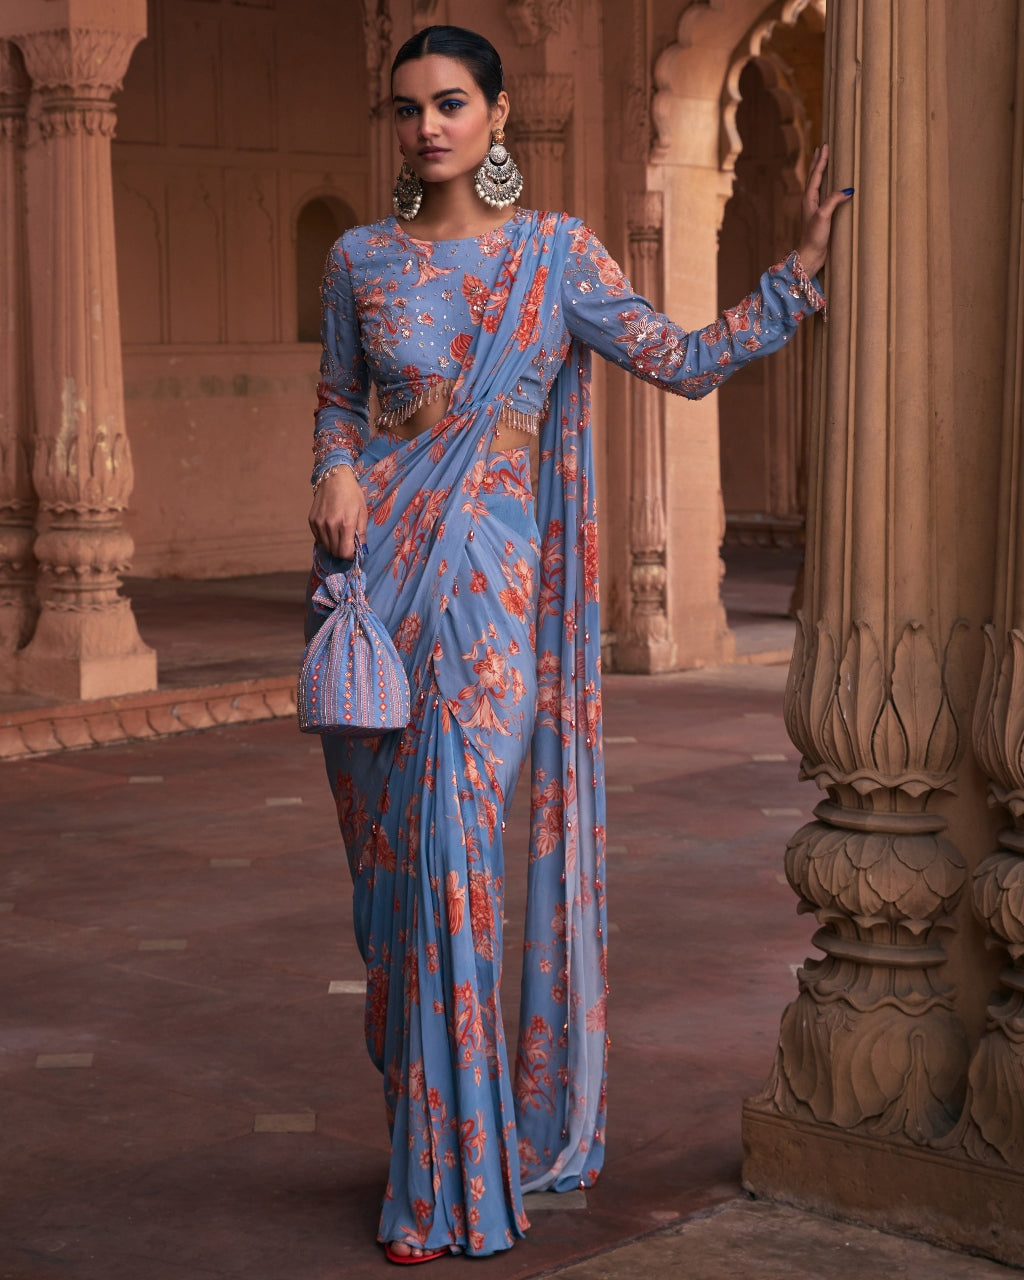 Slate Blue Floral Print and Highlighted Sari Set